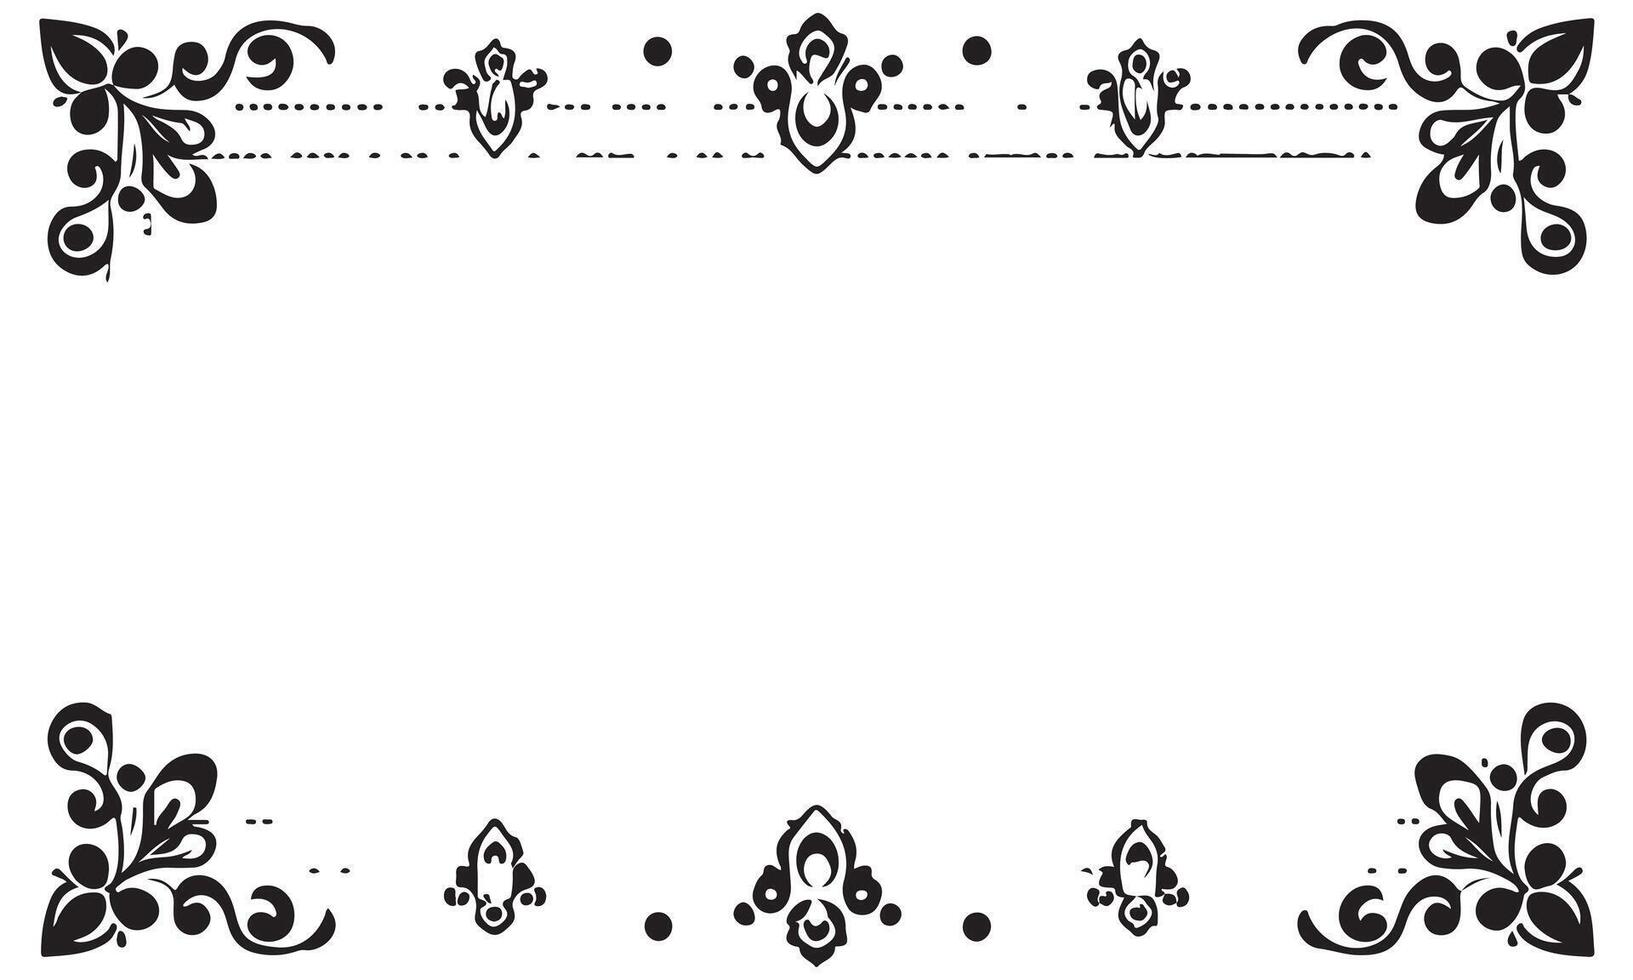 Rectangular frame with decorative corner. Design border line black on white background. vector